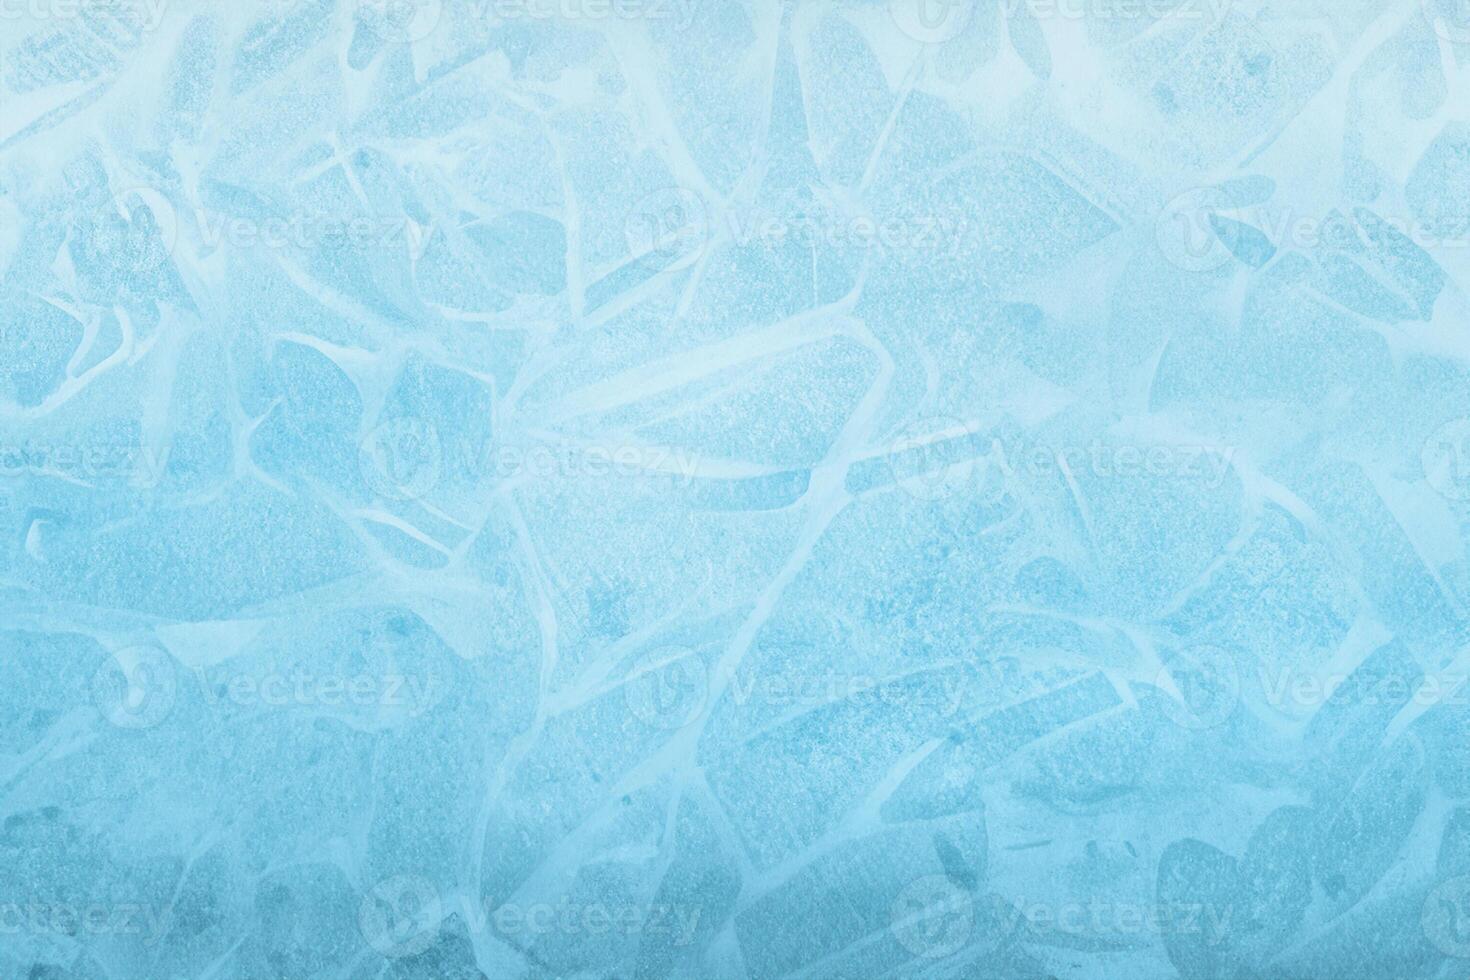 vivace inverno acquerello, astratto mano dipinto ombre textures su bianca sfondo. foto